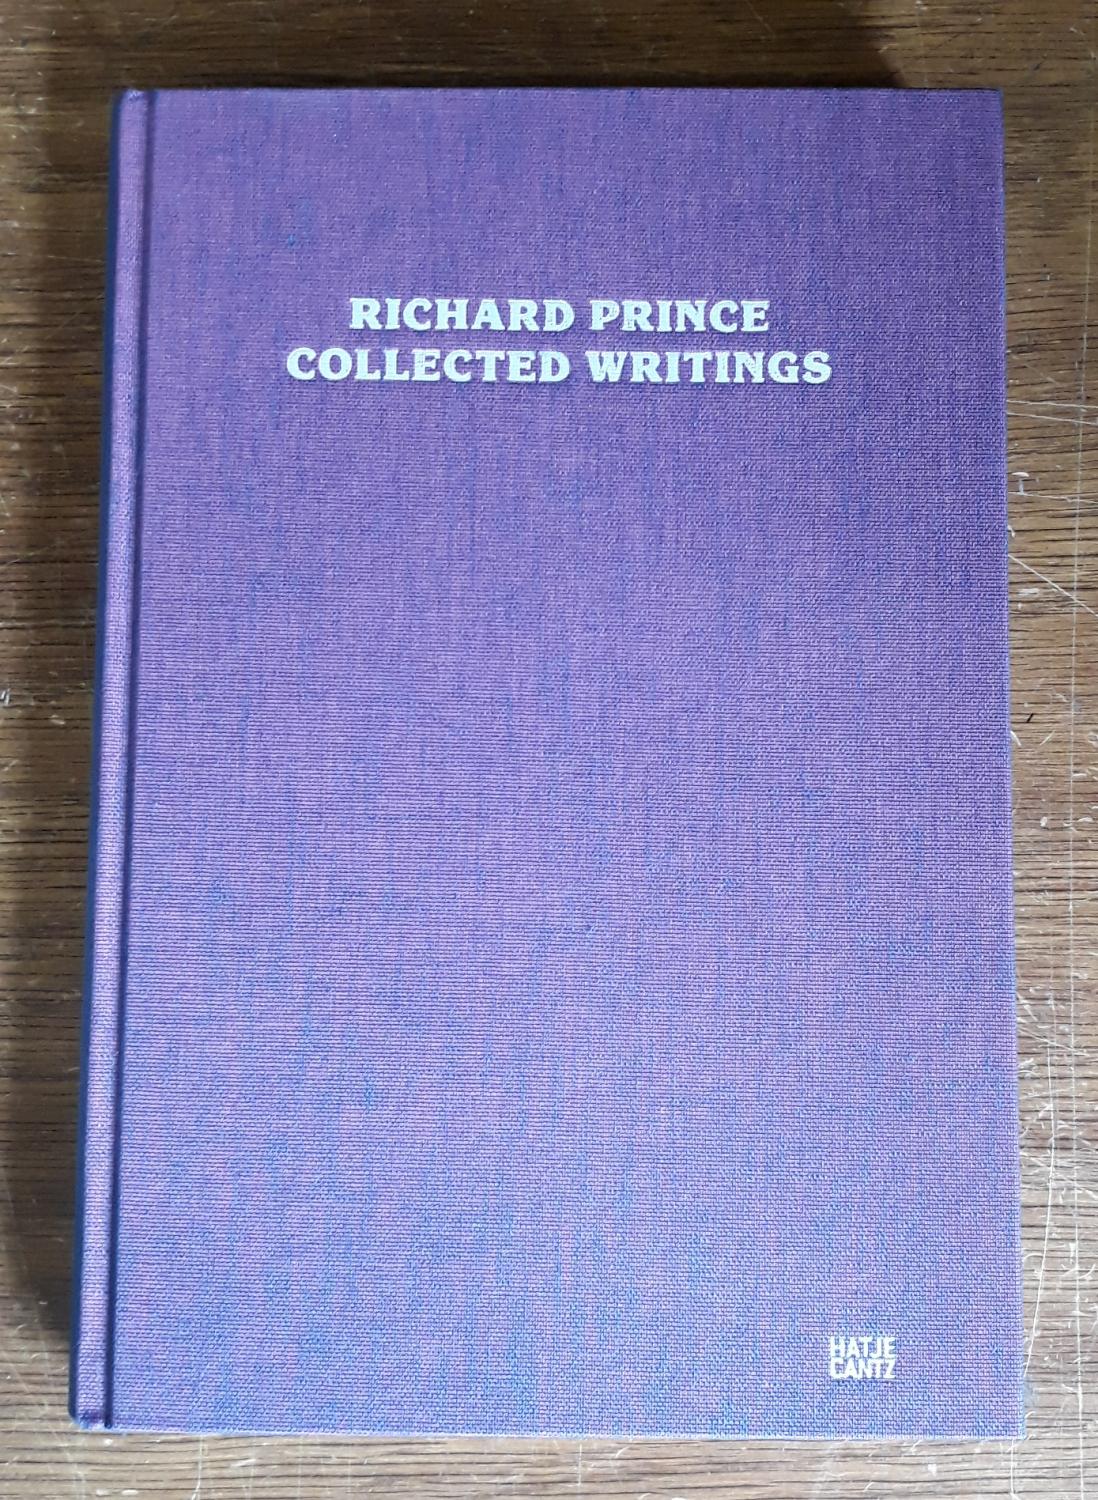 Richard Prince  collected writings